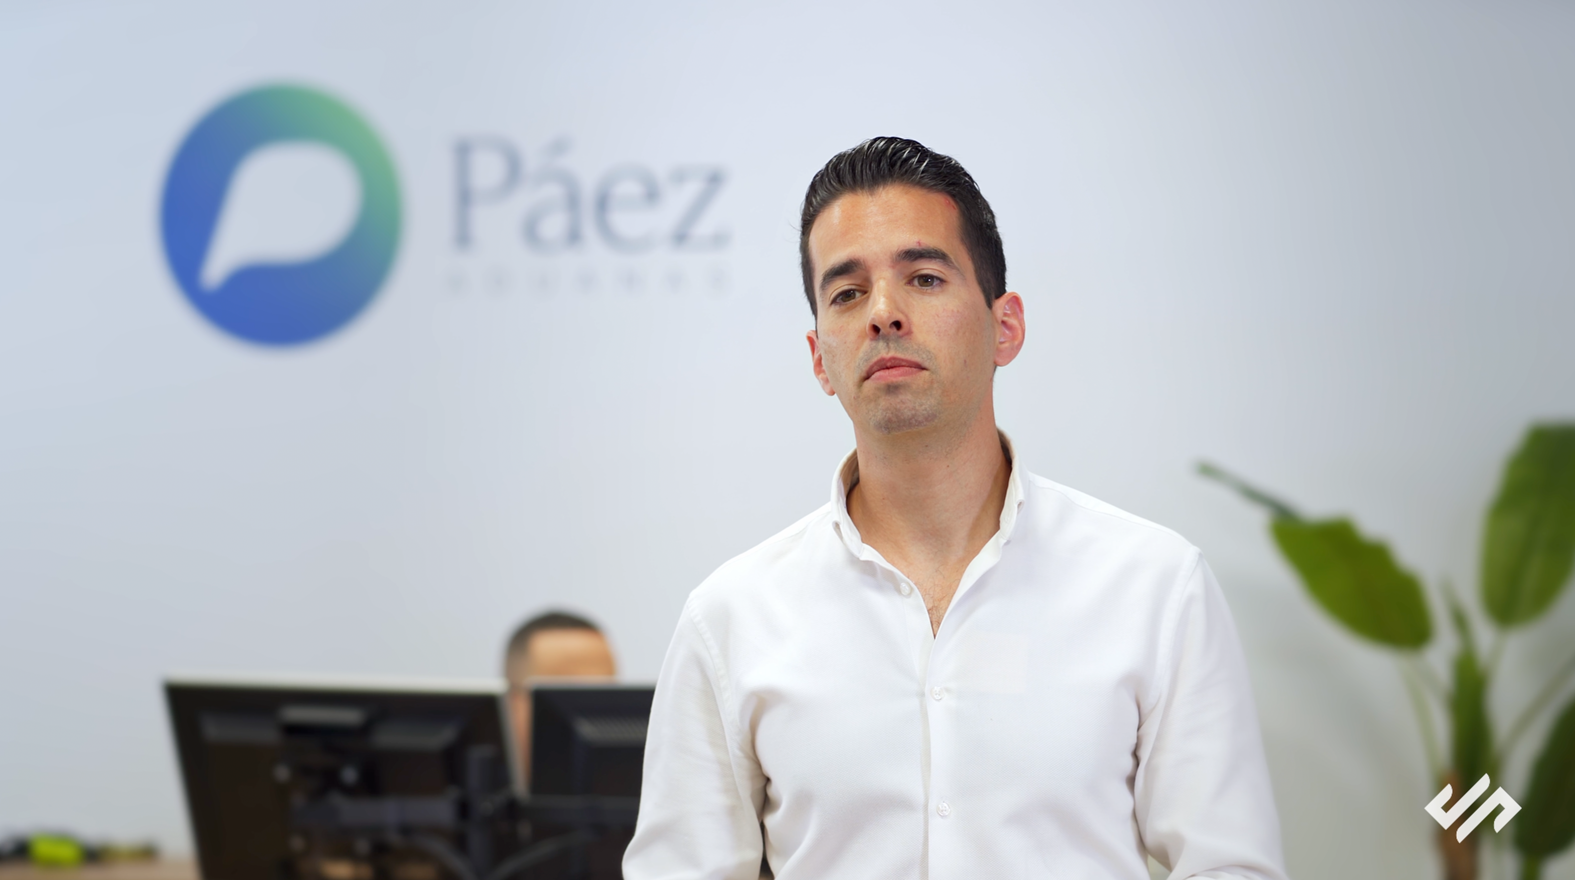 José Páez, Director General de Páez Aduanas